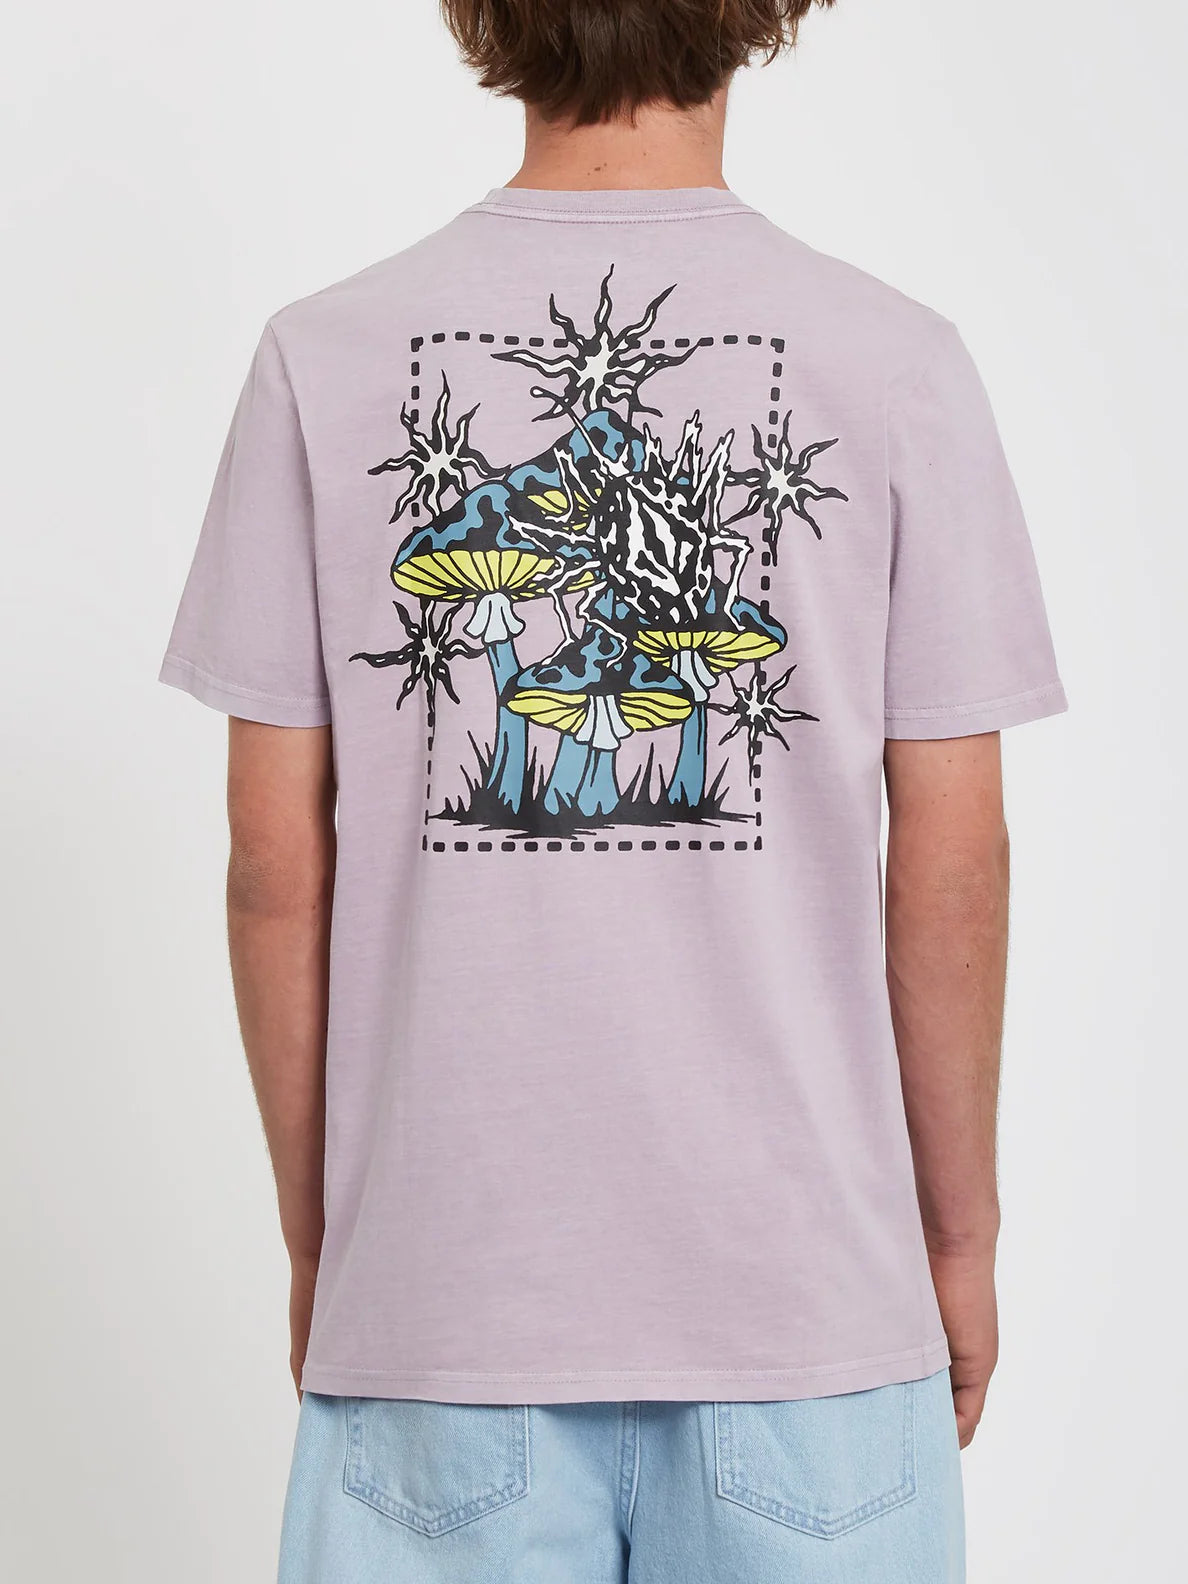 Camiseta Volcom Widgets Nirvana | surfdevils.com